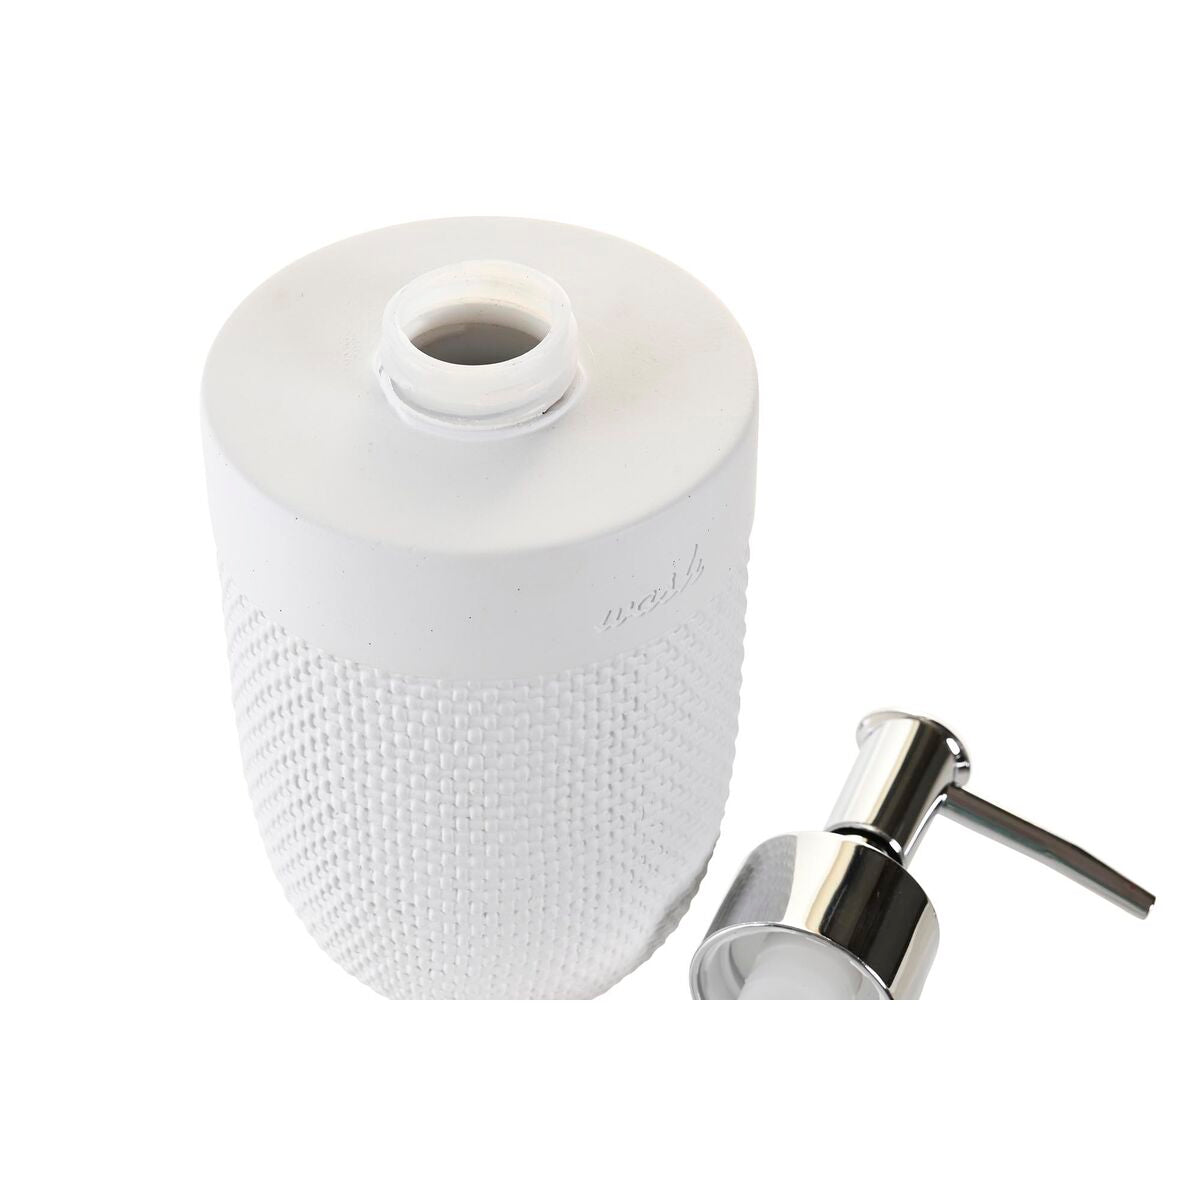 Soap dispenser cement white grip design